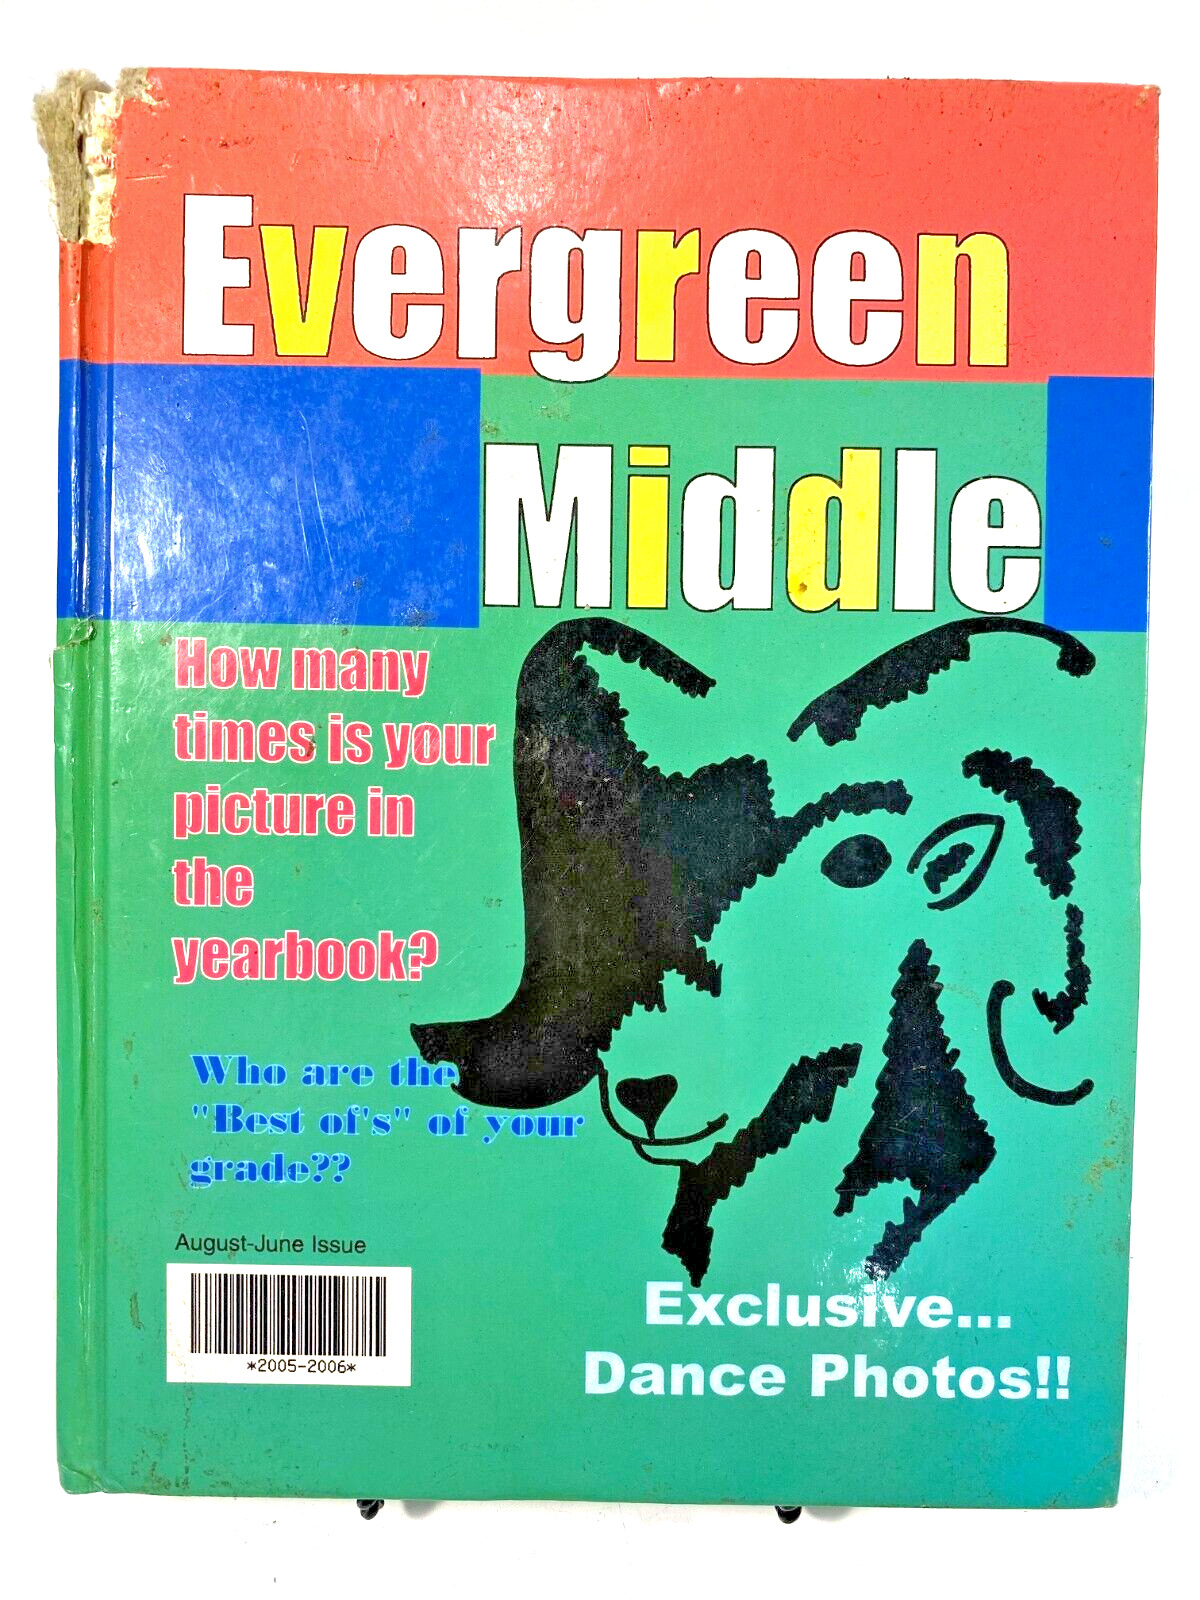 Yearbook Evergreen Middle School 2005-2006 August/June